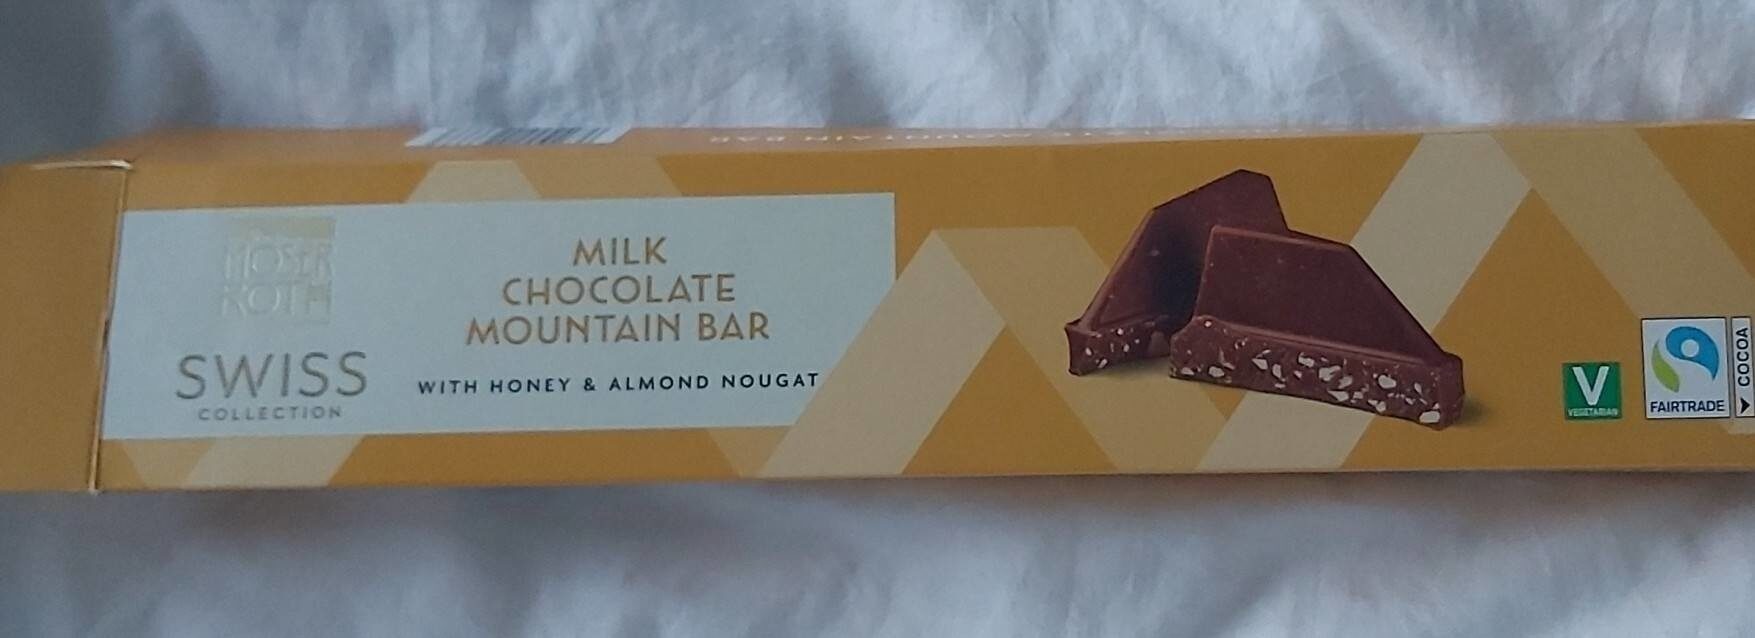 Milk chocolate Mountain bar - Product